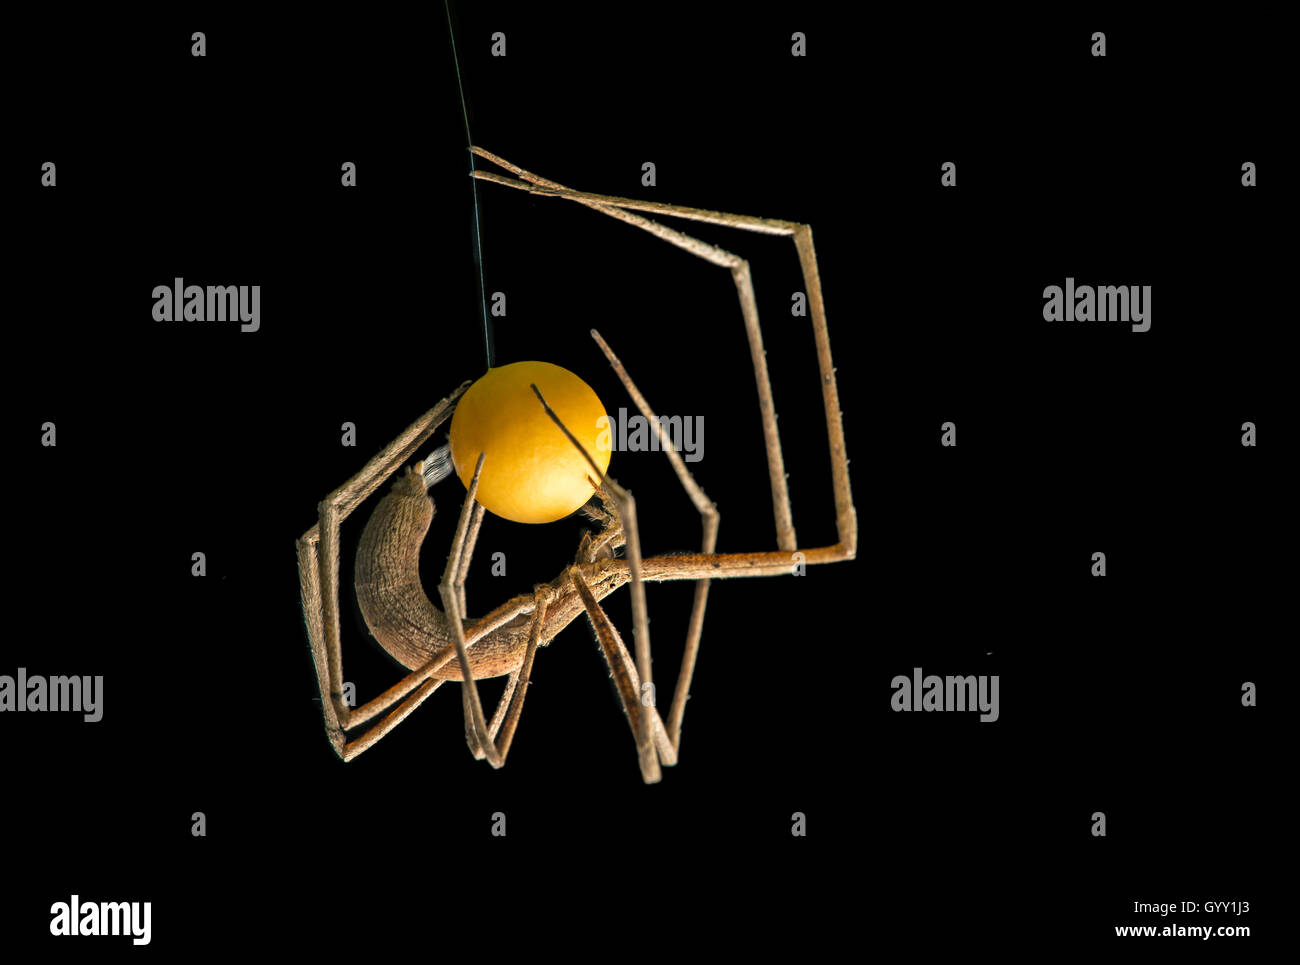 Female Net-casting spider coating its egg ball with silk, (Deinopidae family), Copalinga, Zamora  province, Ecuador Stock Photo